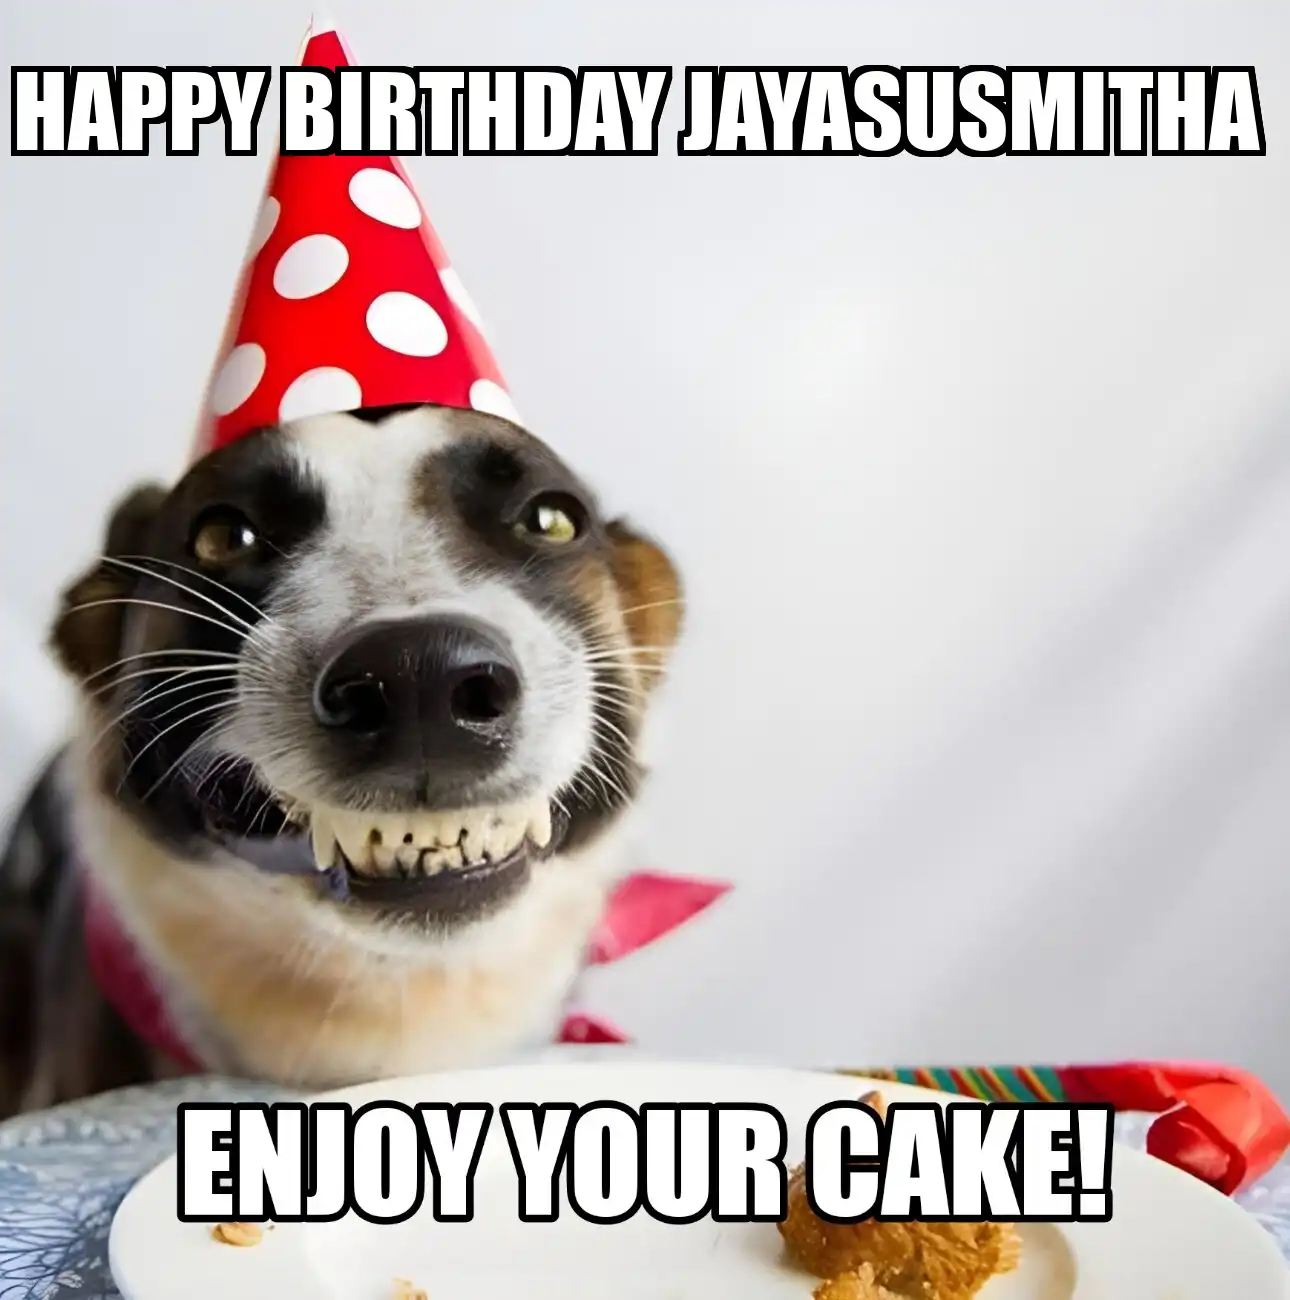 Happy Birthday Jayasusmitha Enjoy Your Cake Dog Meme